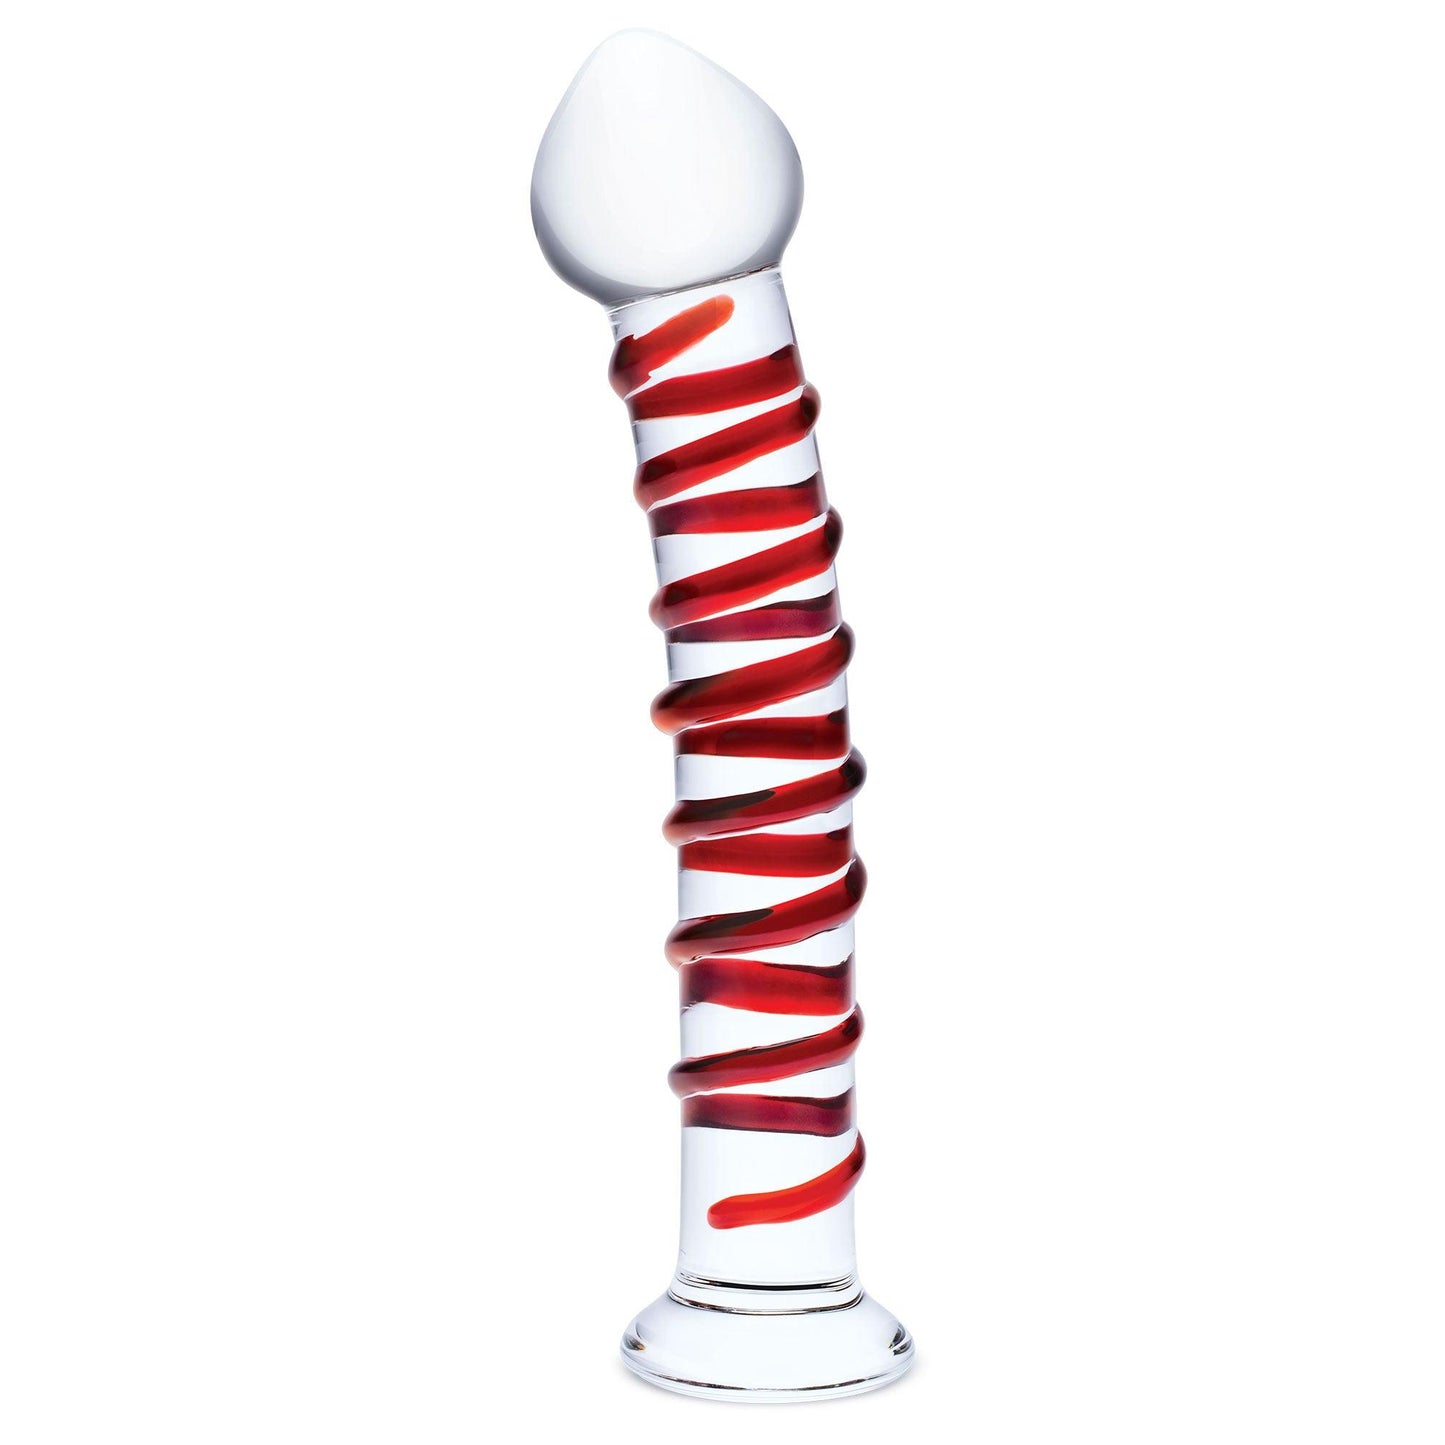 10 Inch Mr. Swirly Dildo - Red/clear - My Sex Toy Hub